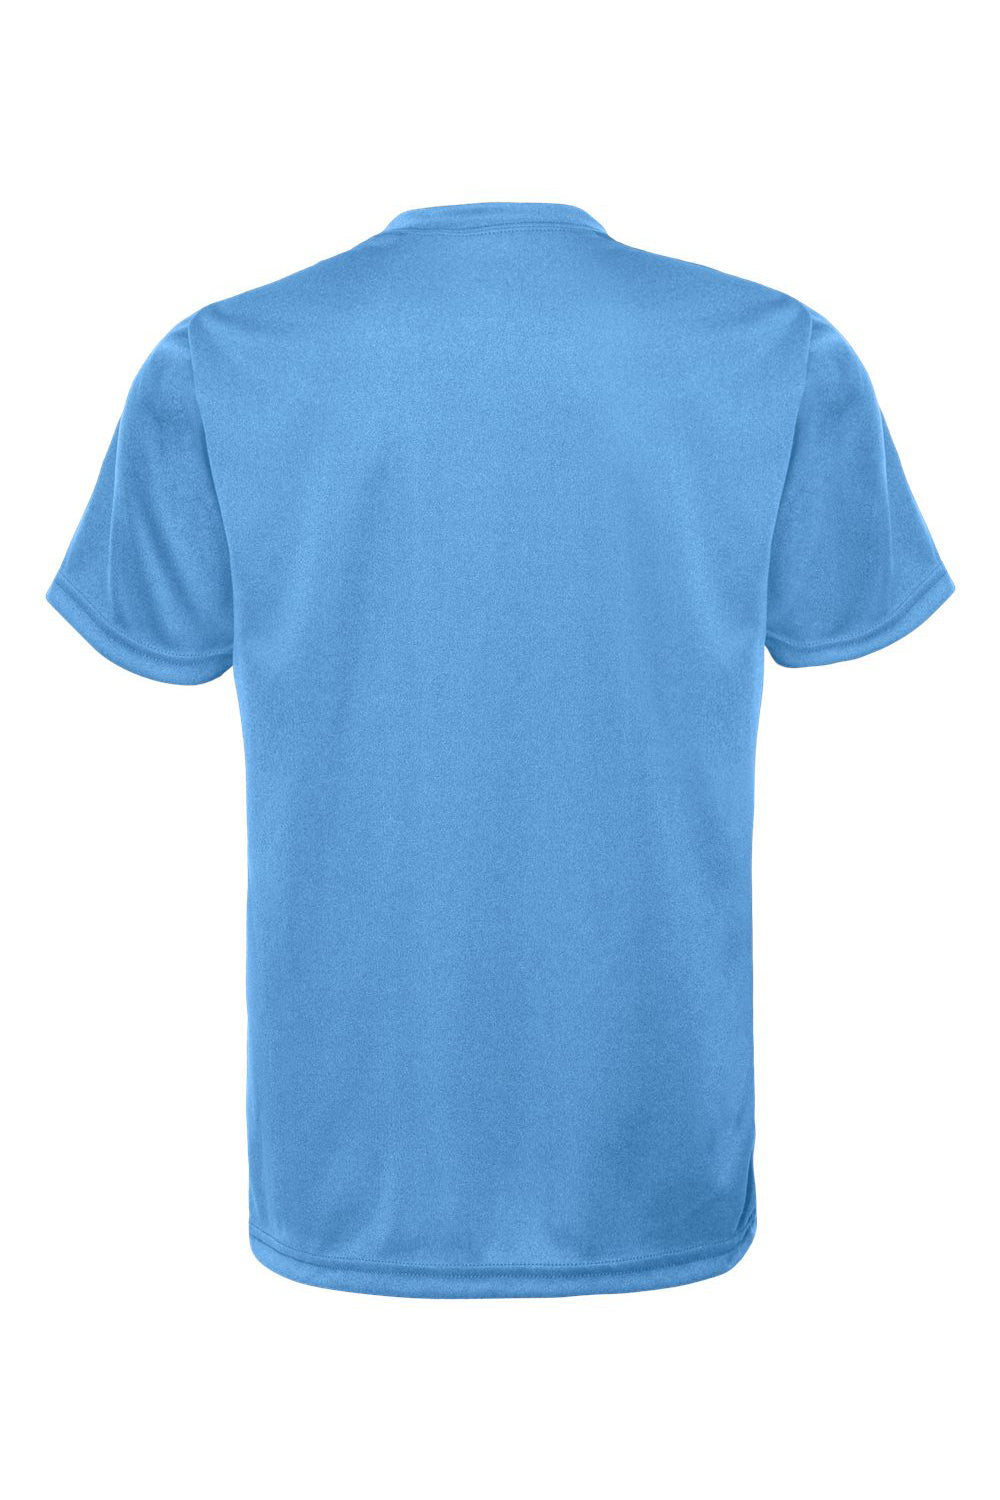 C2 Sport 5200 Youth Performance Moisture Wicking Short Sleeve Crewneck T-Shirt Columbia Blue Flat Back